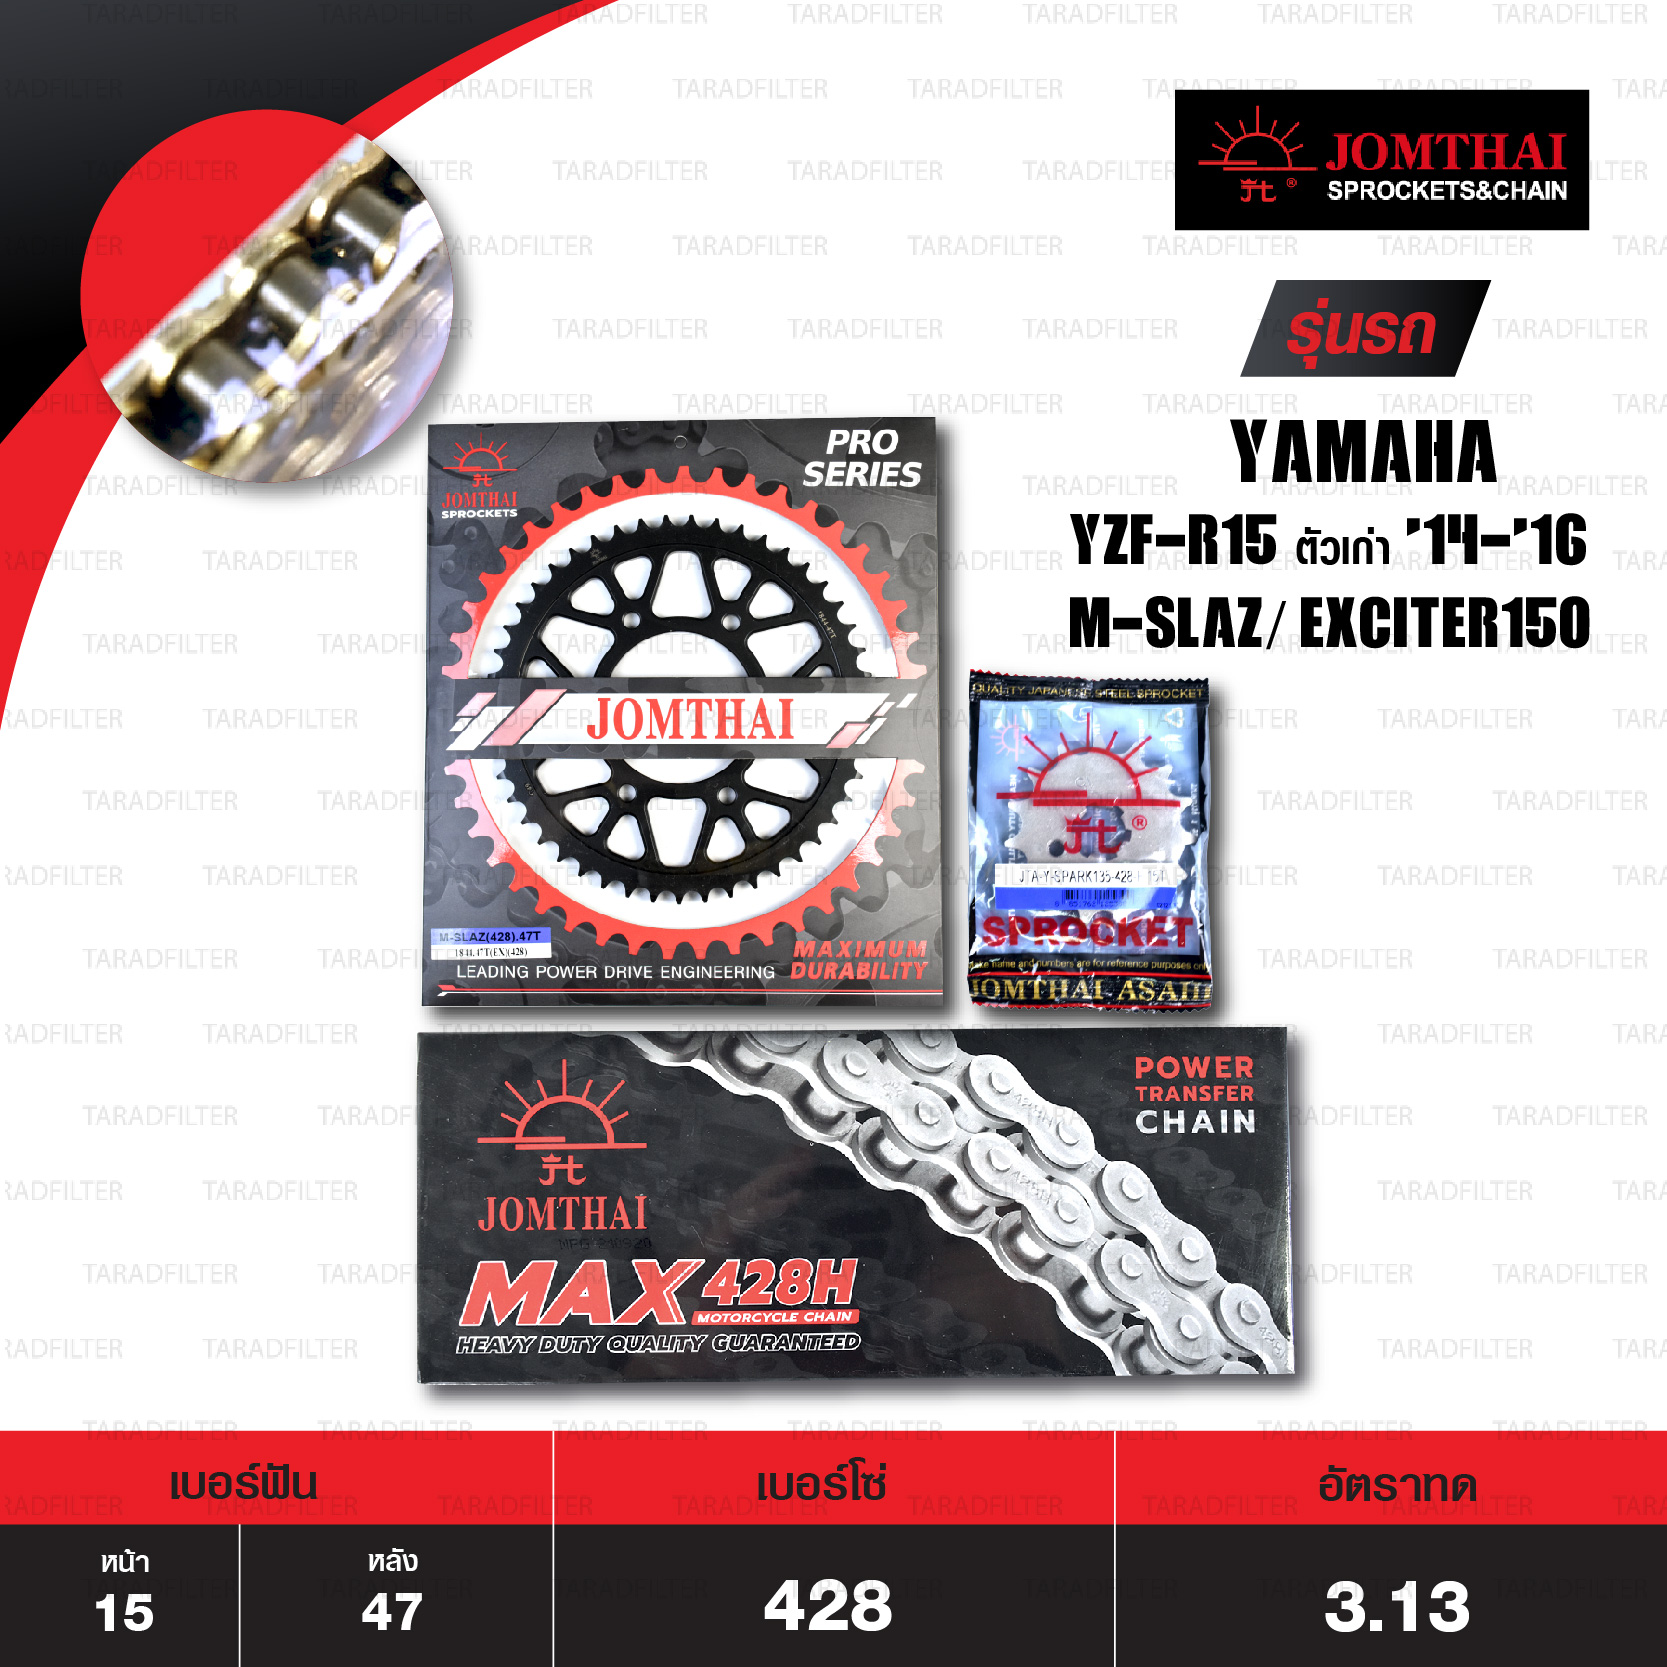 JOMTHAI ชุดเปลี่ยนโซ่-สเตอร์ Pro Series โซ่ Heavy Duty (HDR) สีทอง-ทอง และ สเตอร์หลังสีดำ ใช้สำหรับ Yamaha รุ่น YZF-R15 ตัวเก่า, M-Slaz และ Exciter150 [15/47]